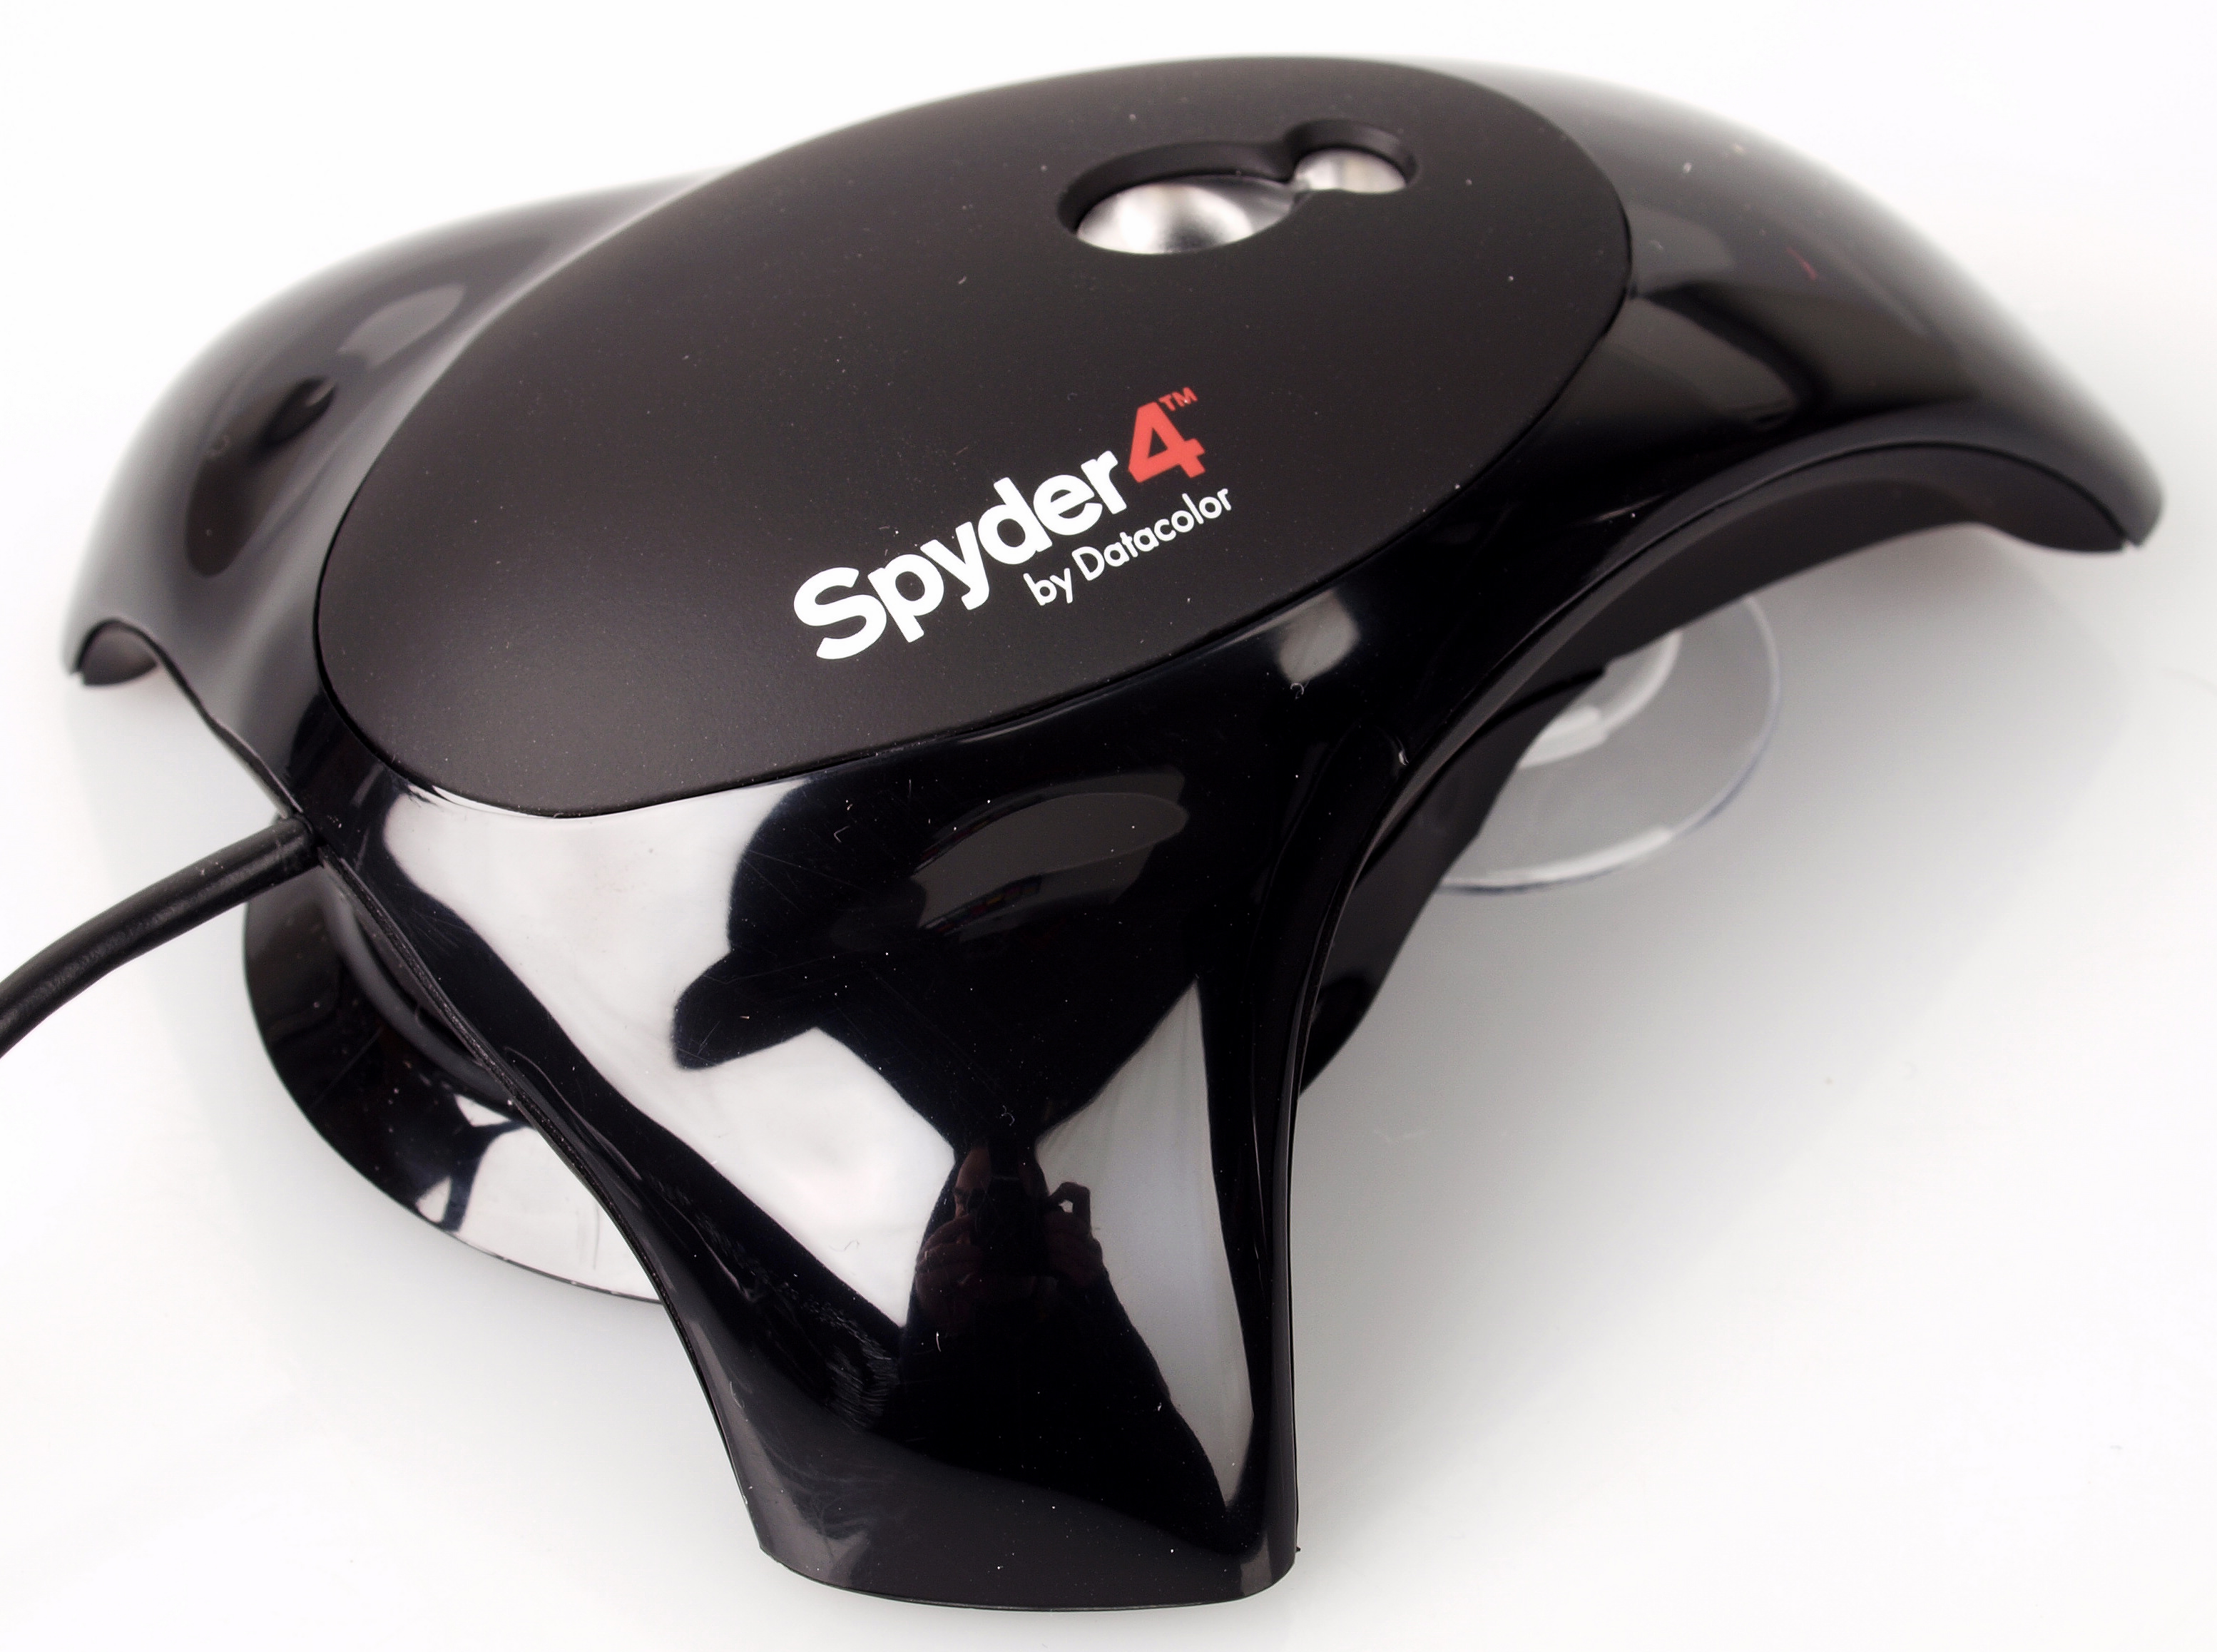 Spyder 3 elite 3.x download